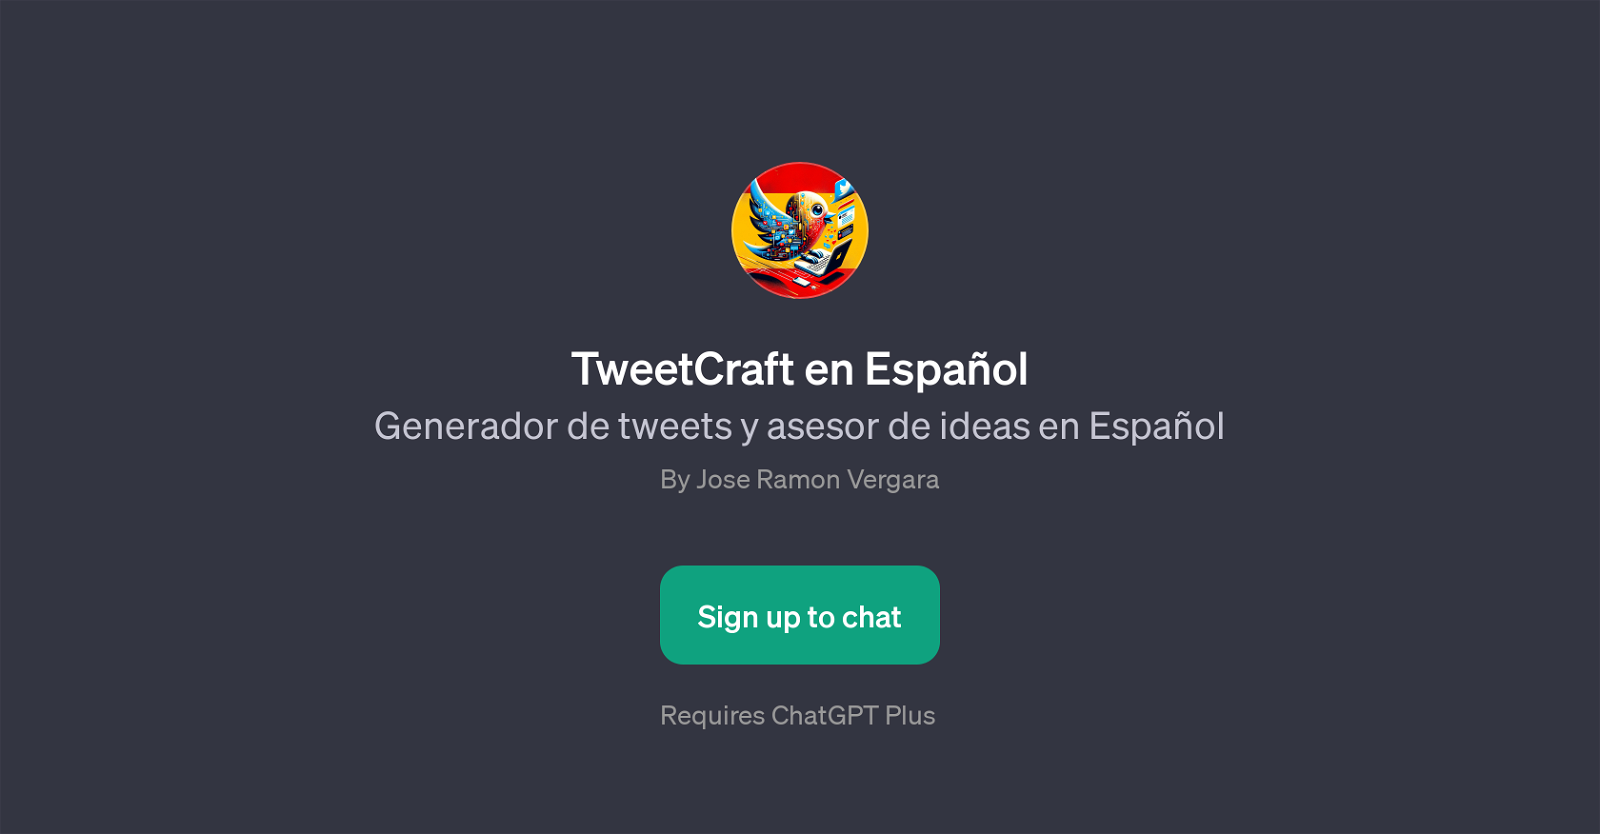 TweetCraft en Espaol website